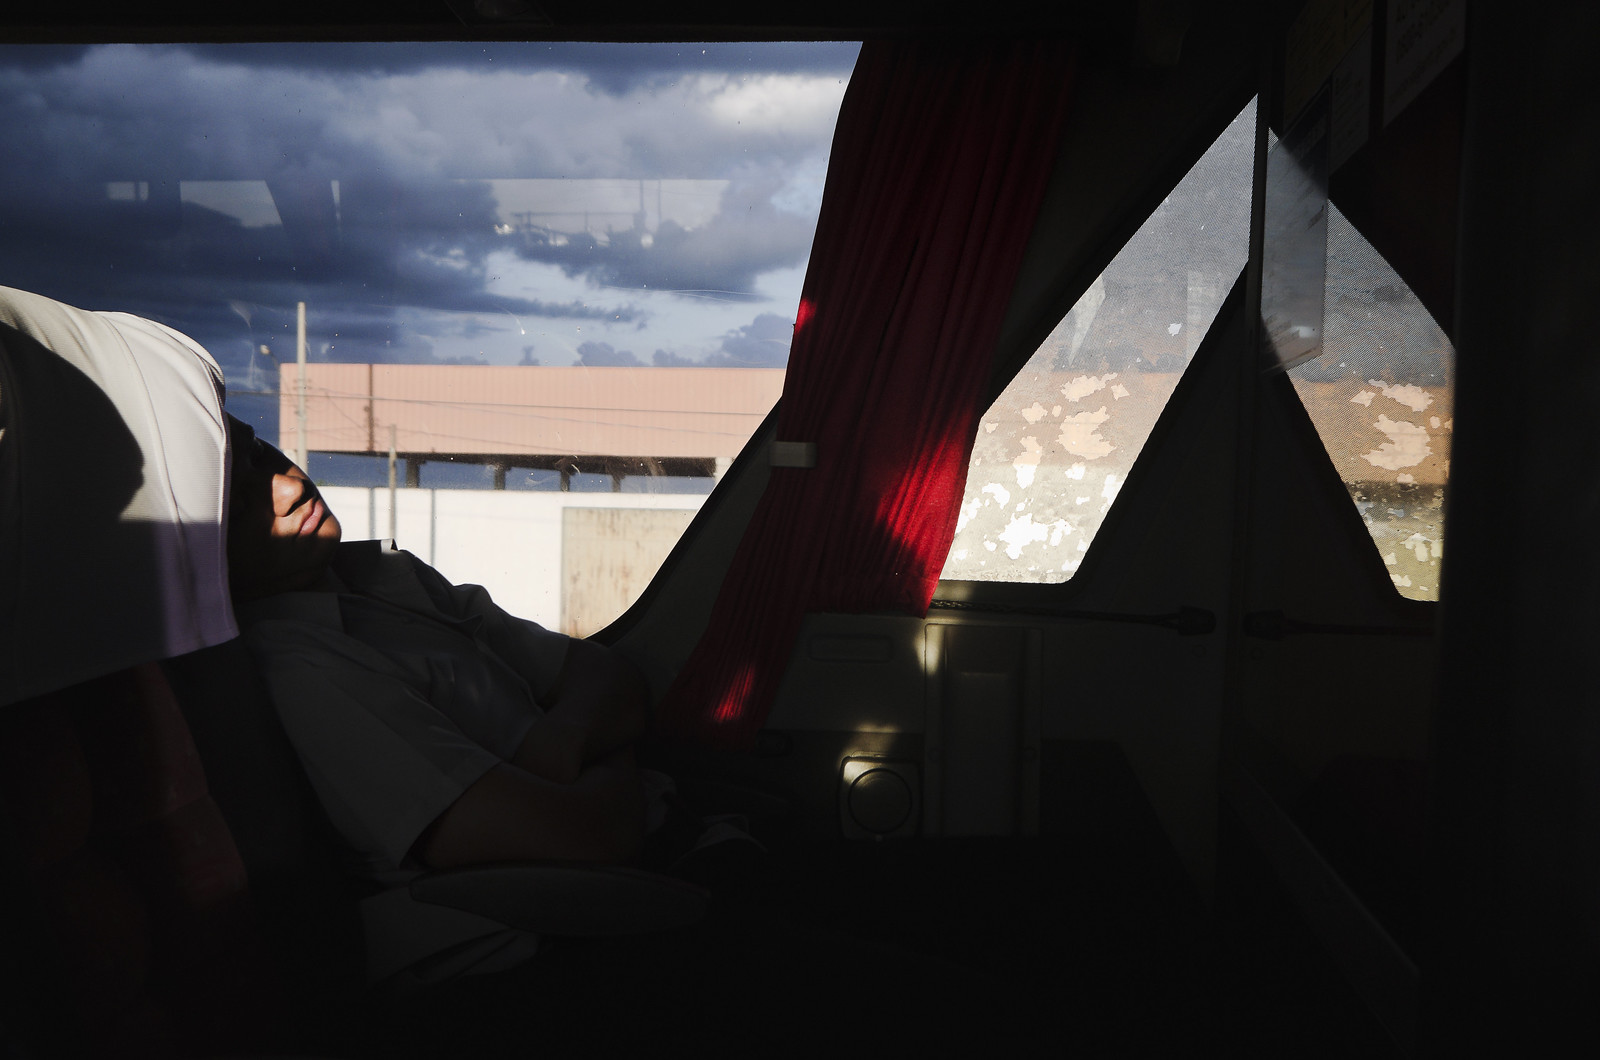 Bus sleep, Gustavo Minas, journal of wild culture, ©2020